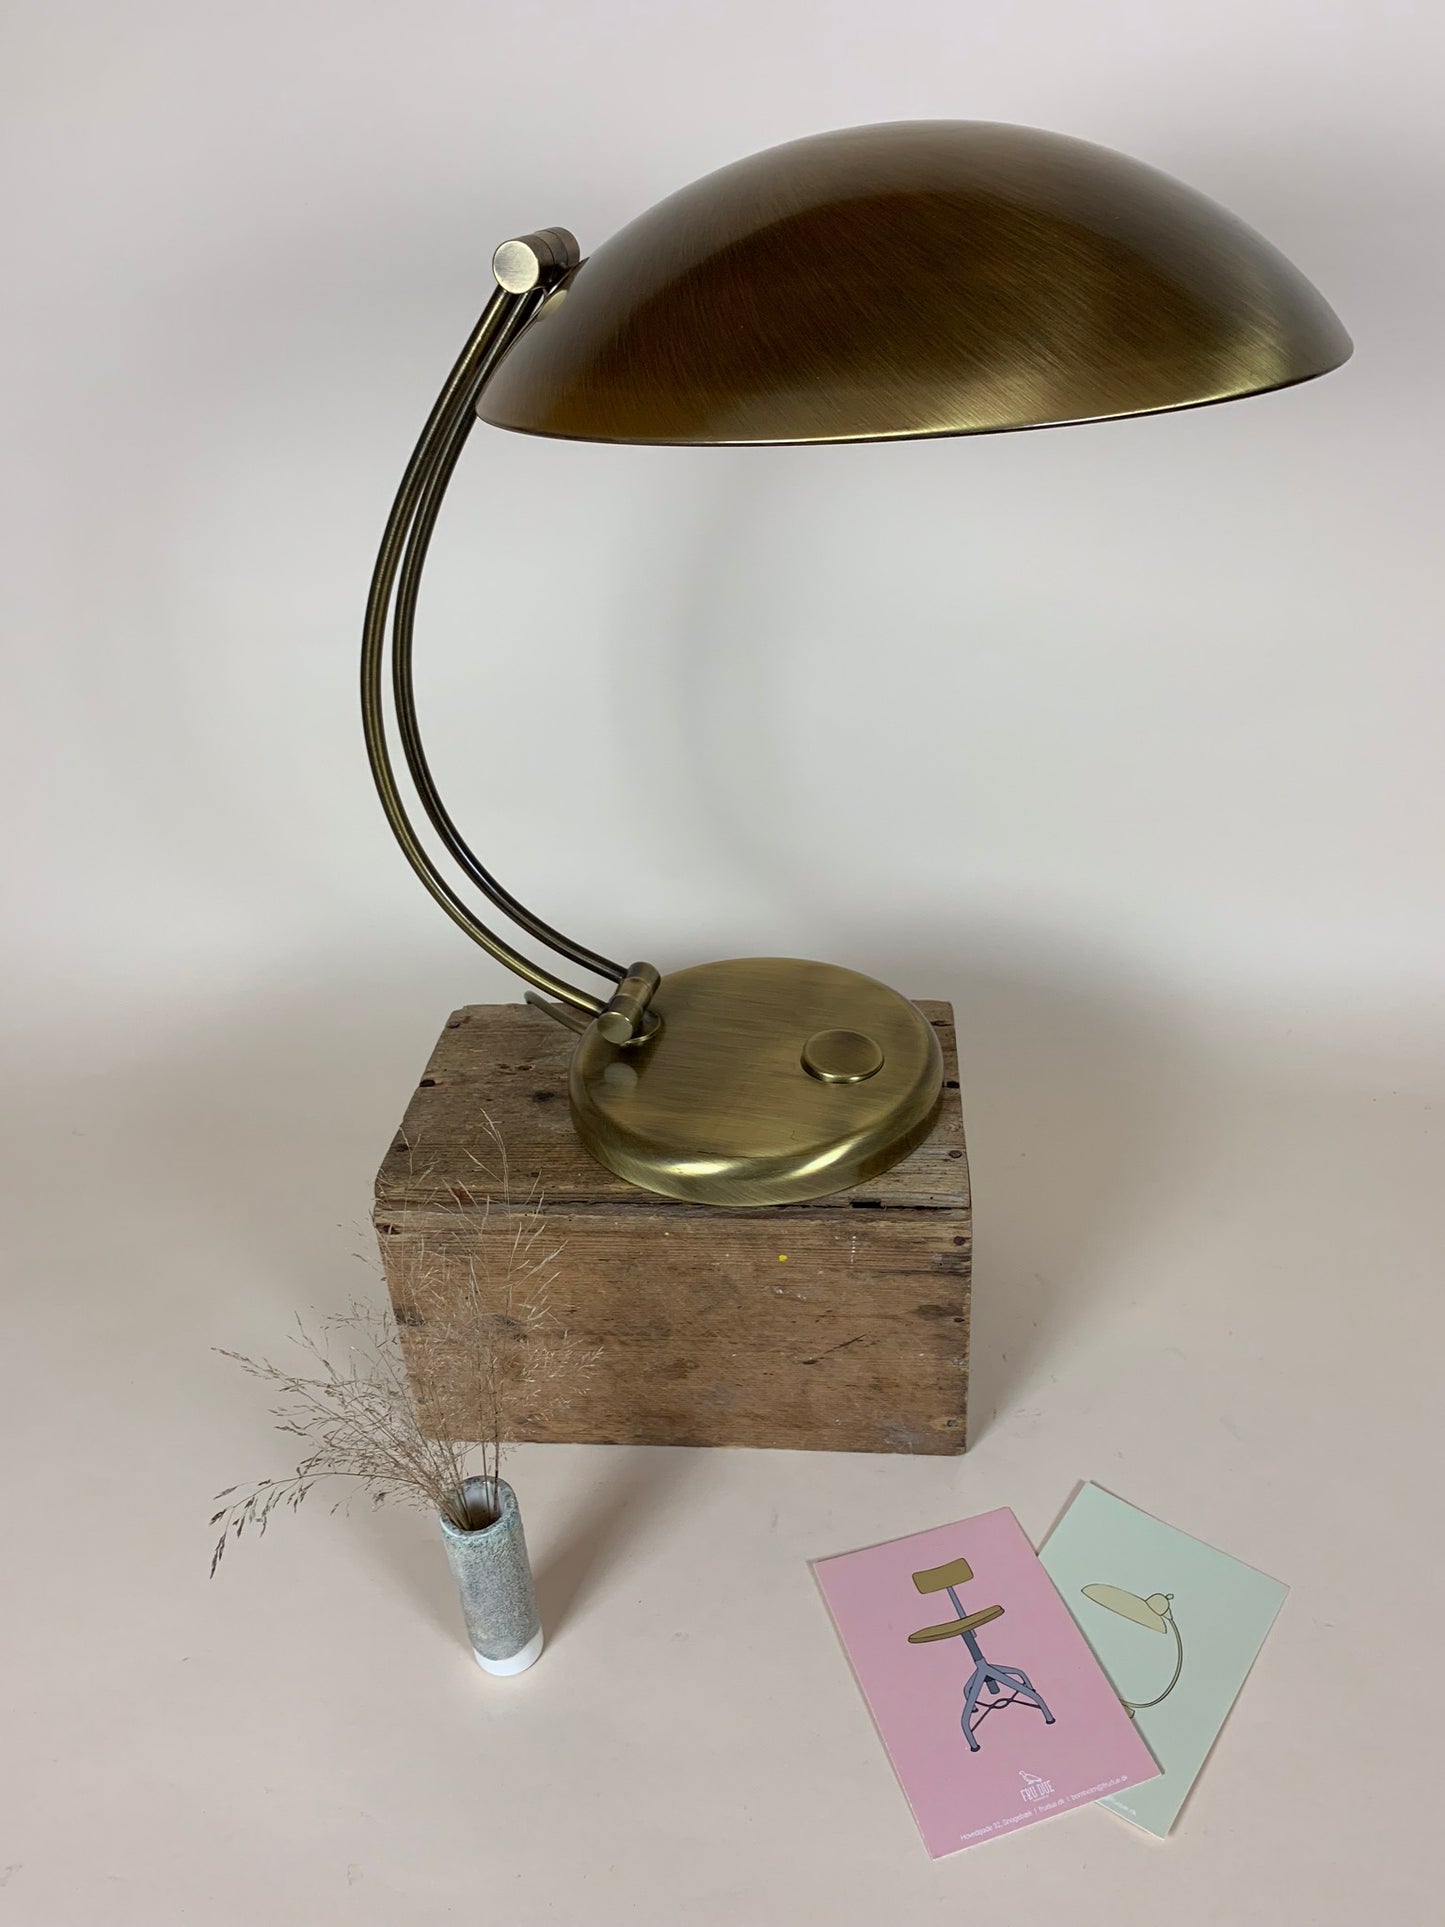 Hillebrandlampe um 1950 - Seltenes Exemplar